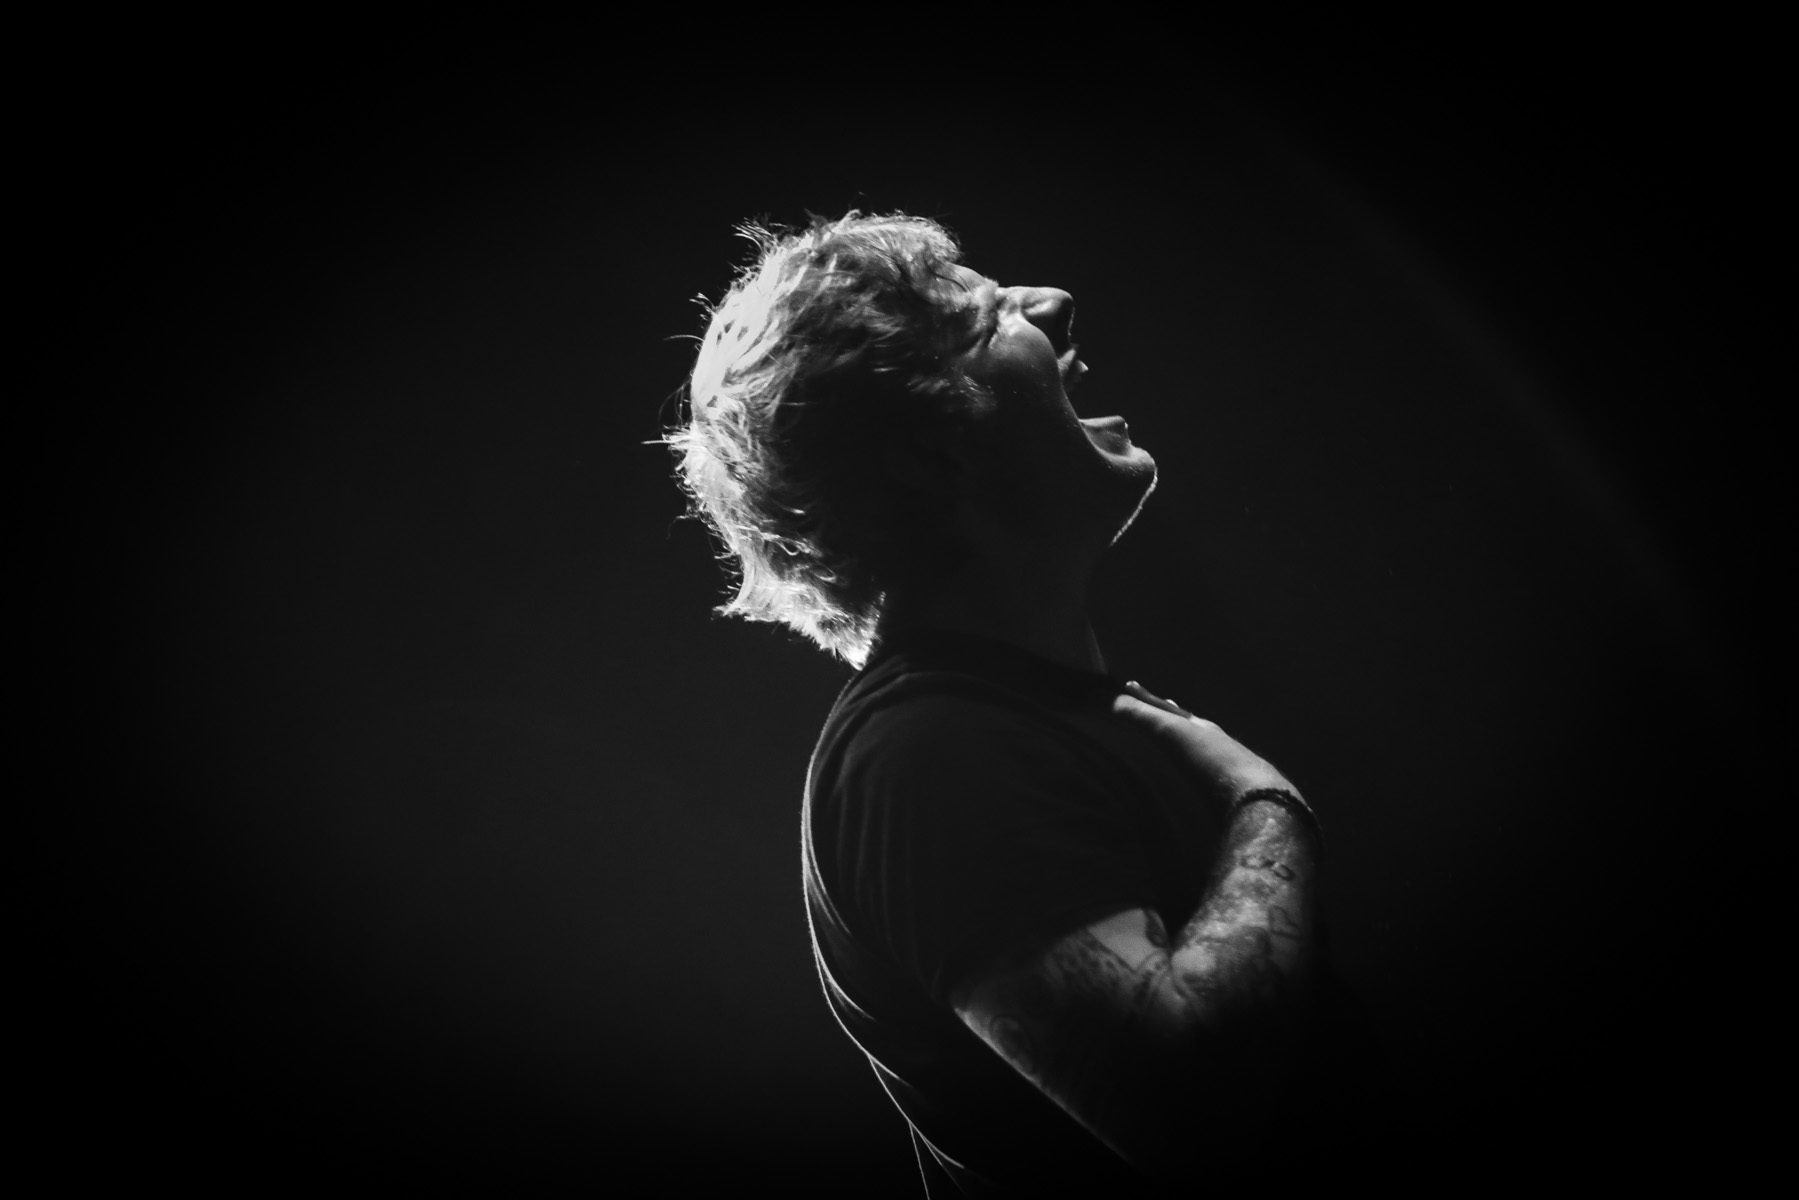 Ed Sheeran at the Royal Albert Hall by Christie Goodwin